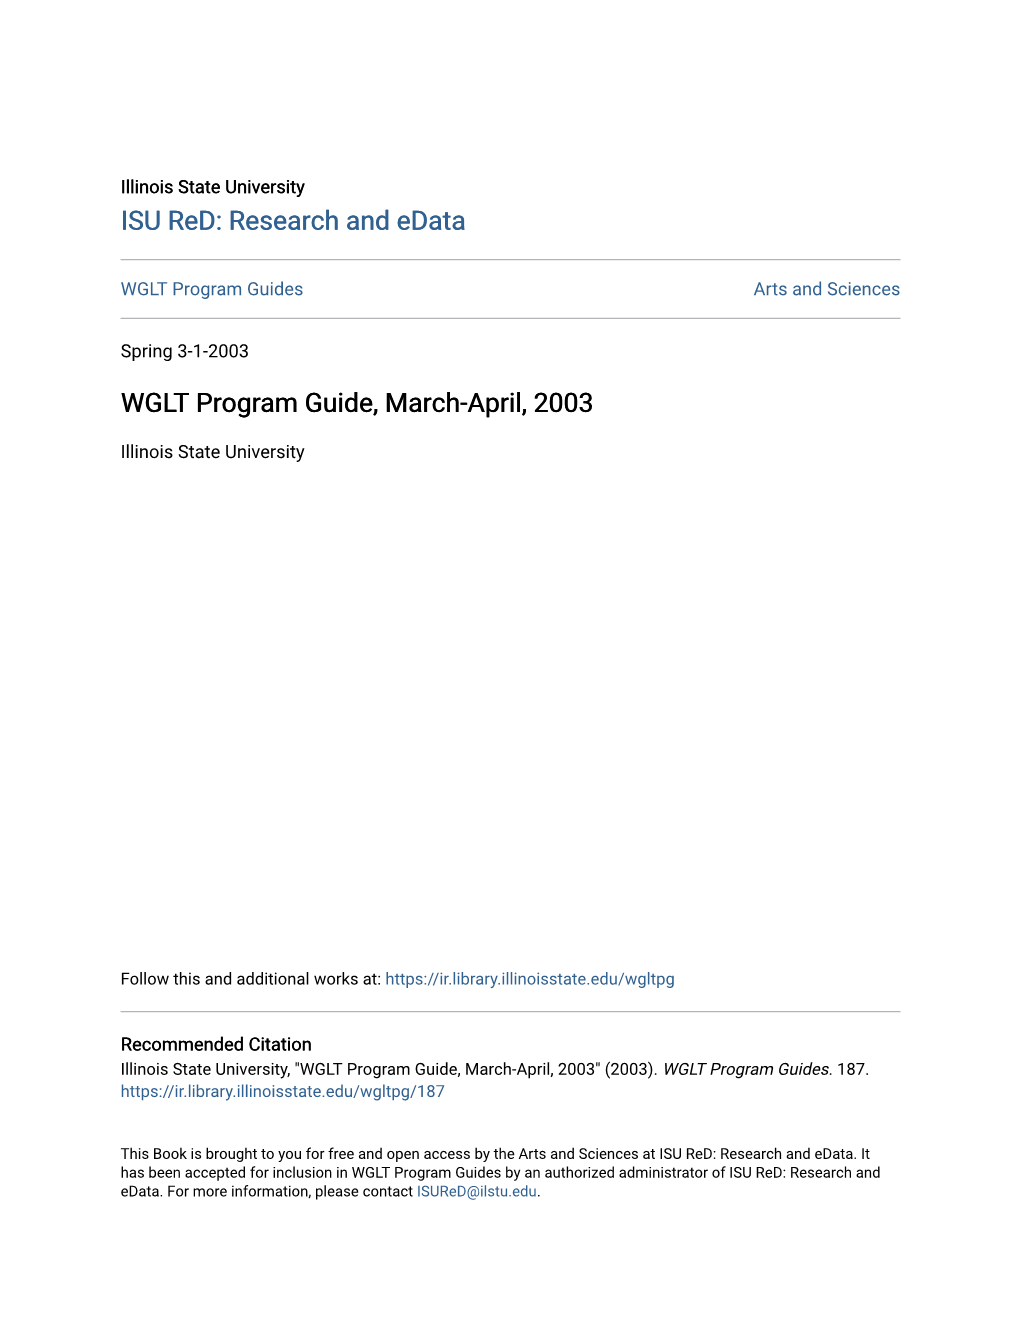 WGLT Program Guide, March-April, 2003